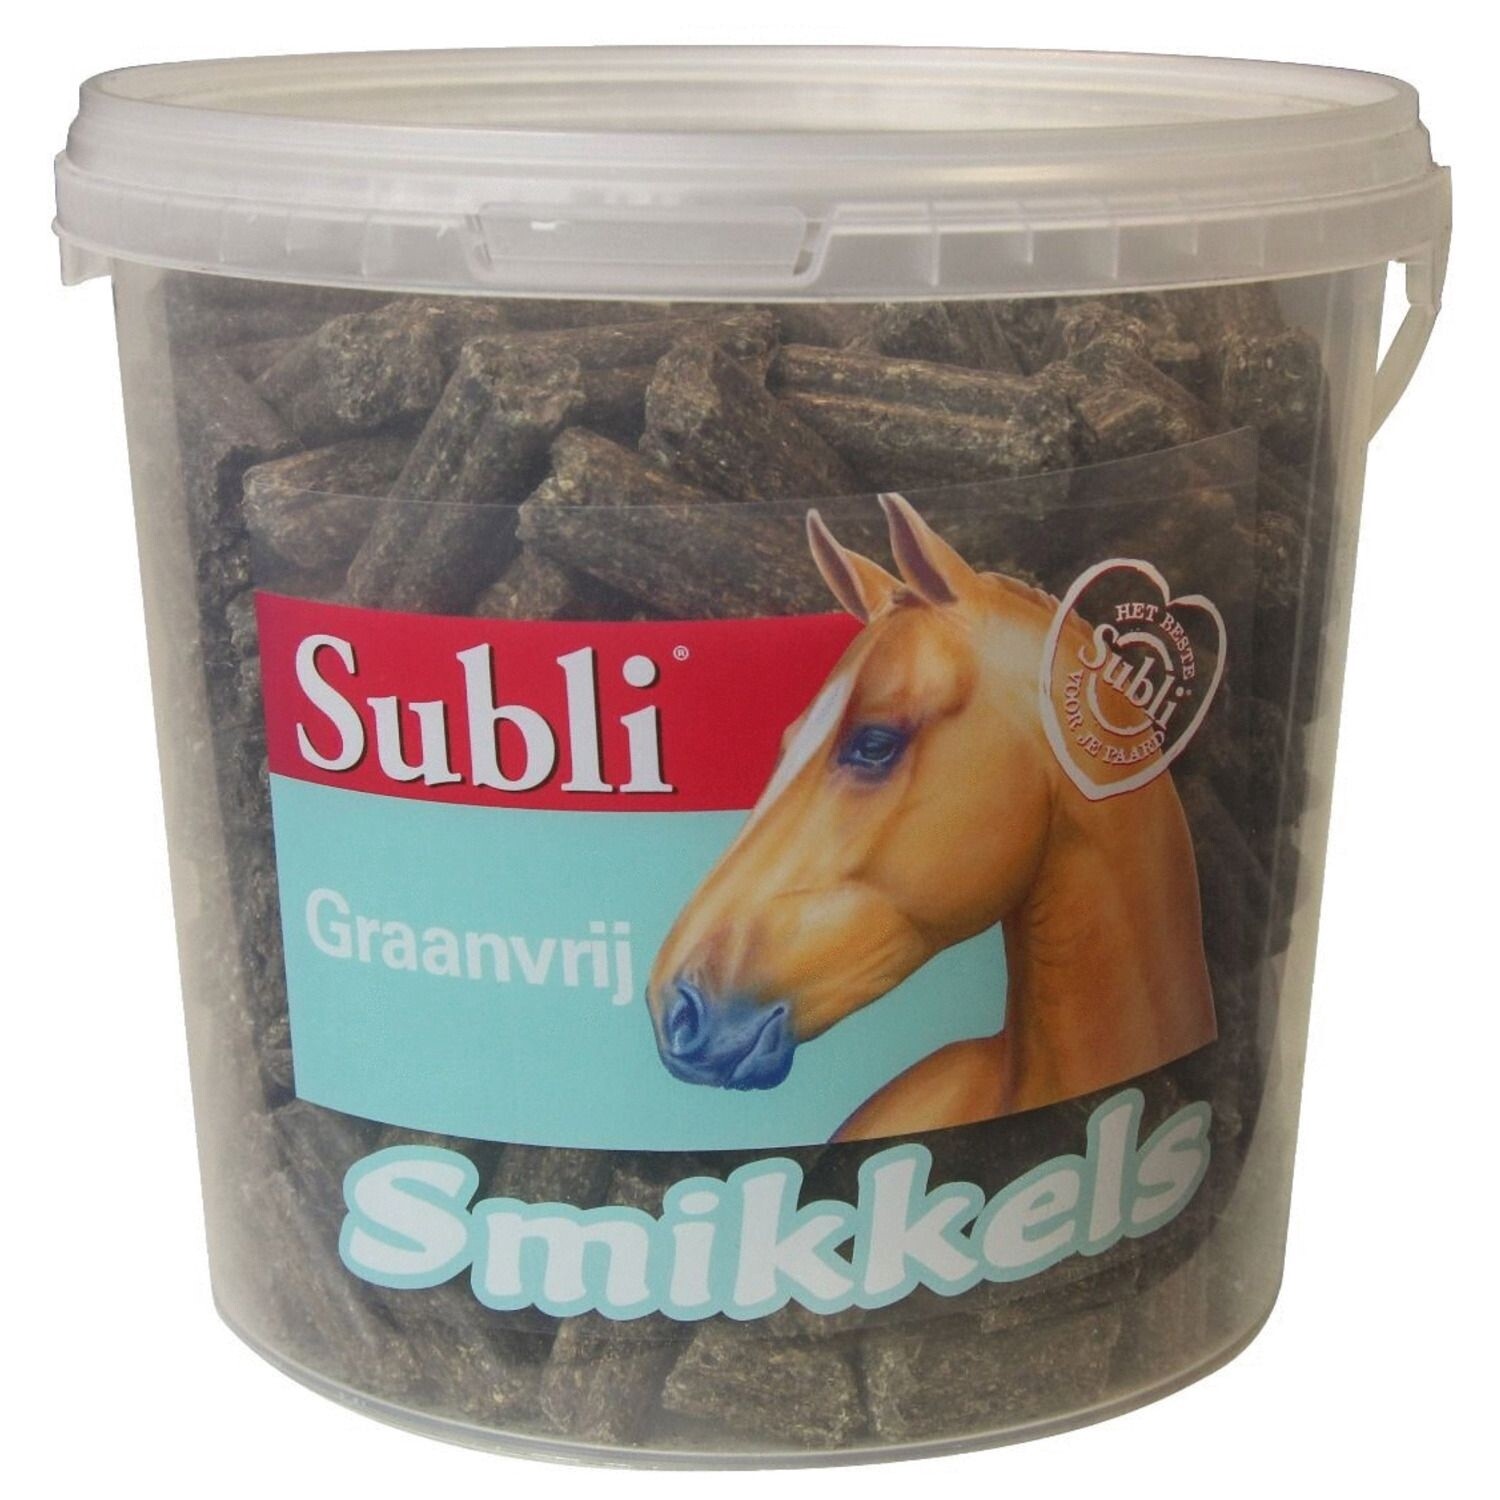 Subli - Smikkels graanvrij 1.5 kg